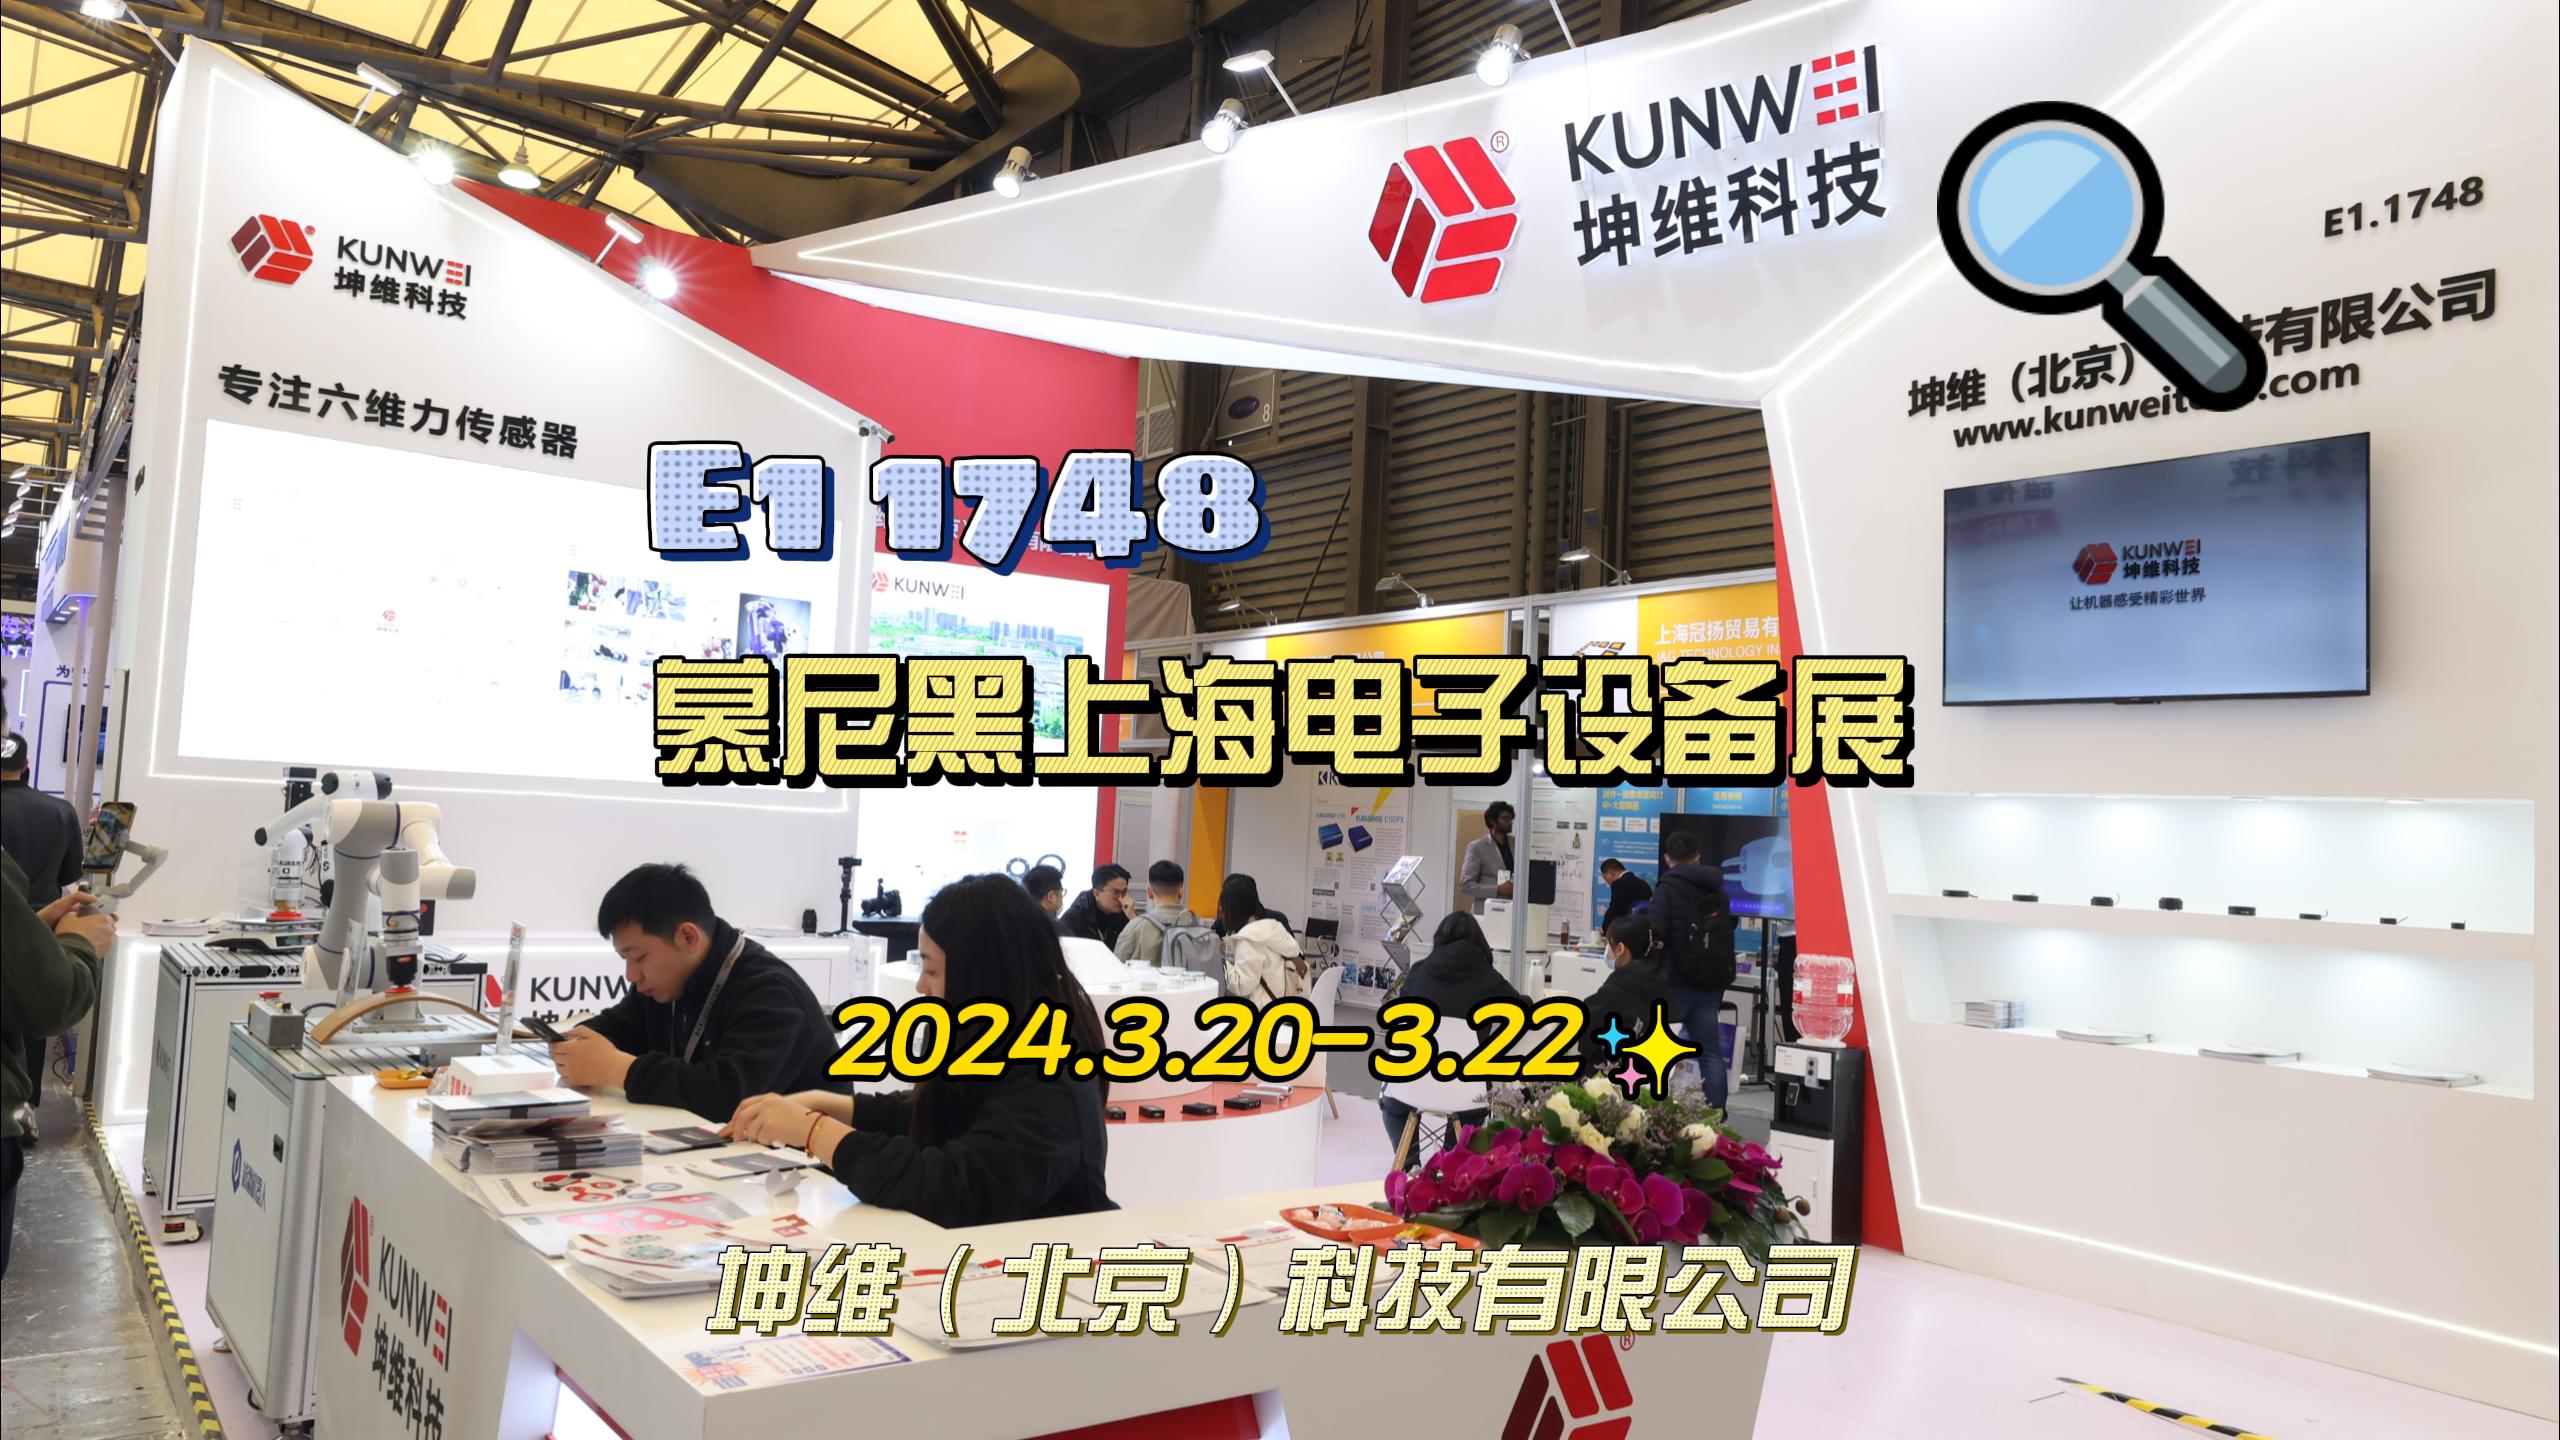 EP54：展会直击|坤维科技亮相2024上海慕尼黑电子设备展，展位号: E1馆1748，欢迎莅临观展